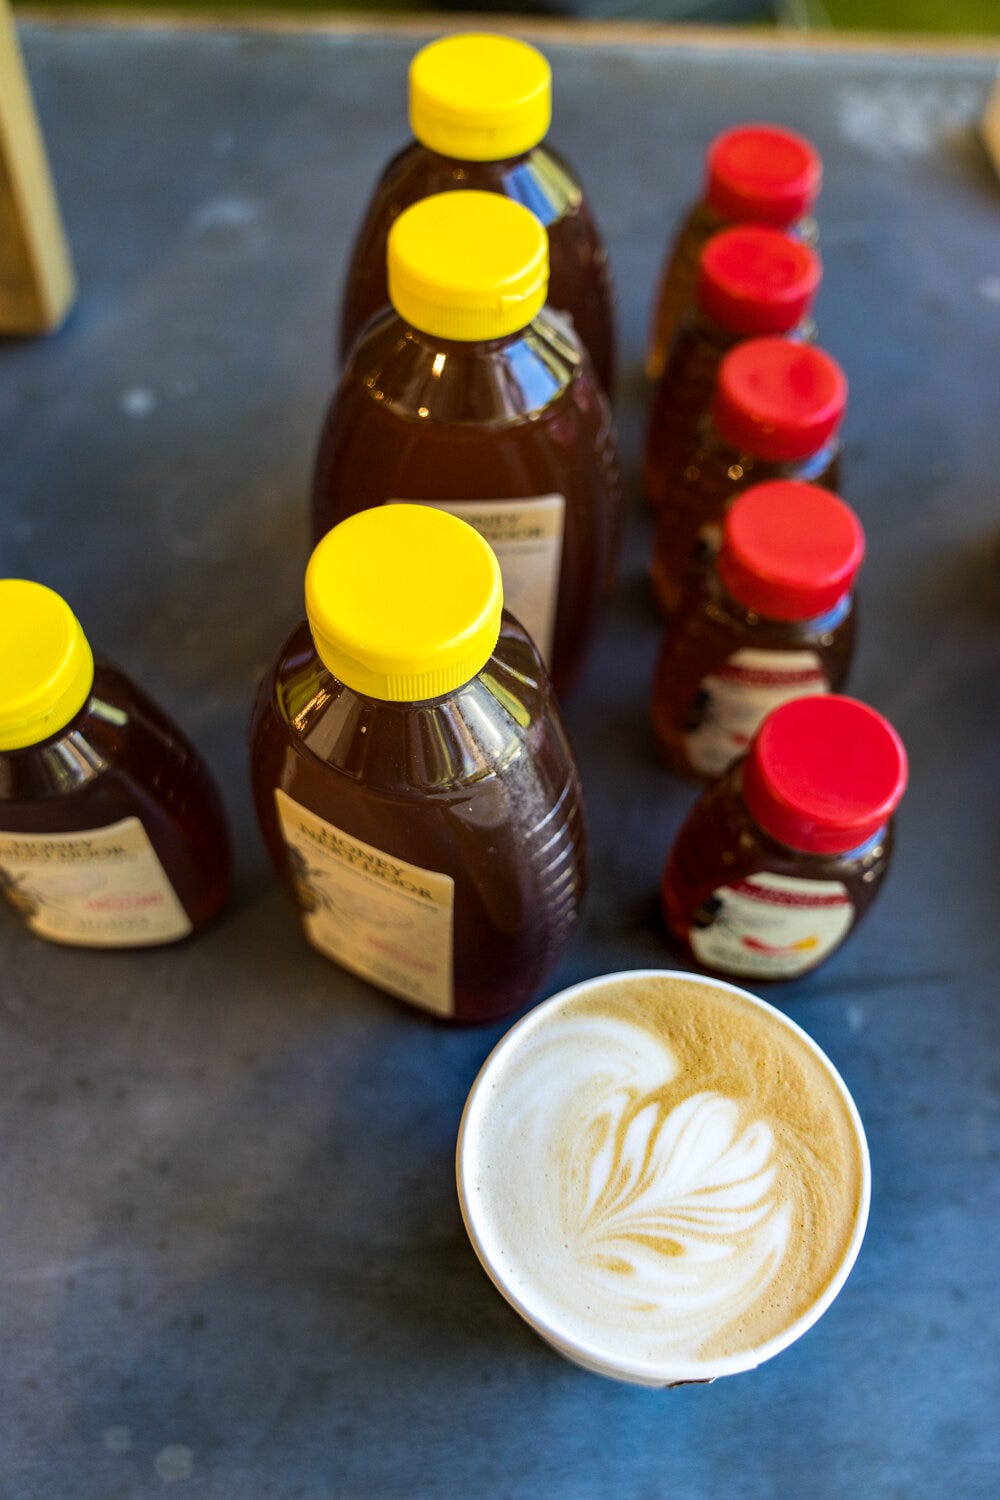 The honey latte, with the honey from Honey Next Door.